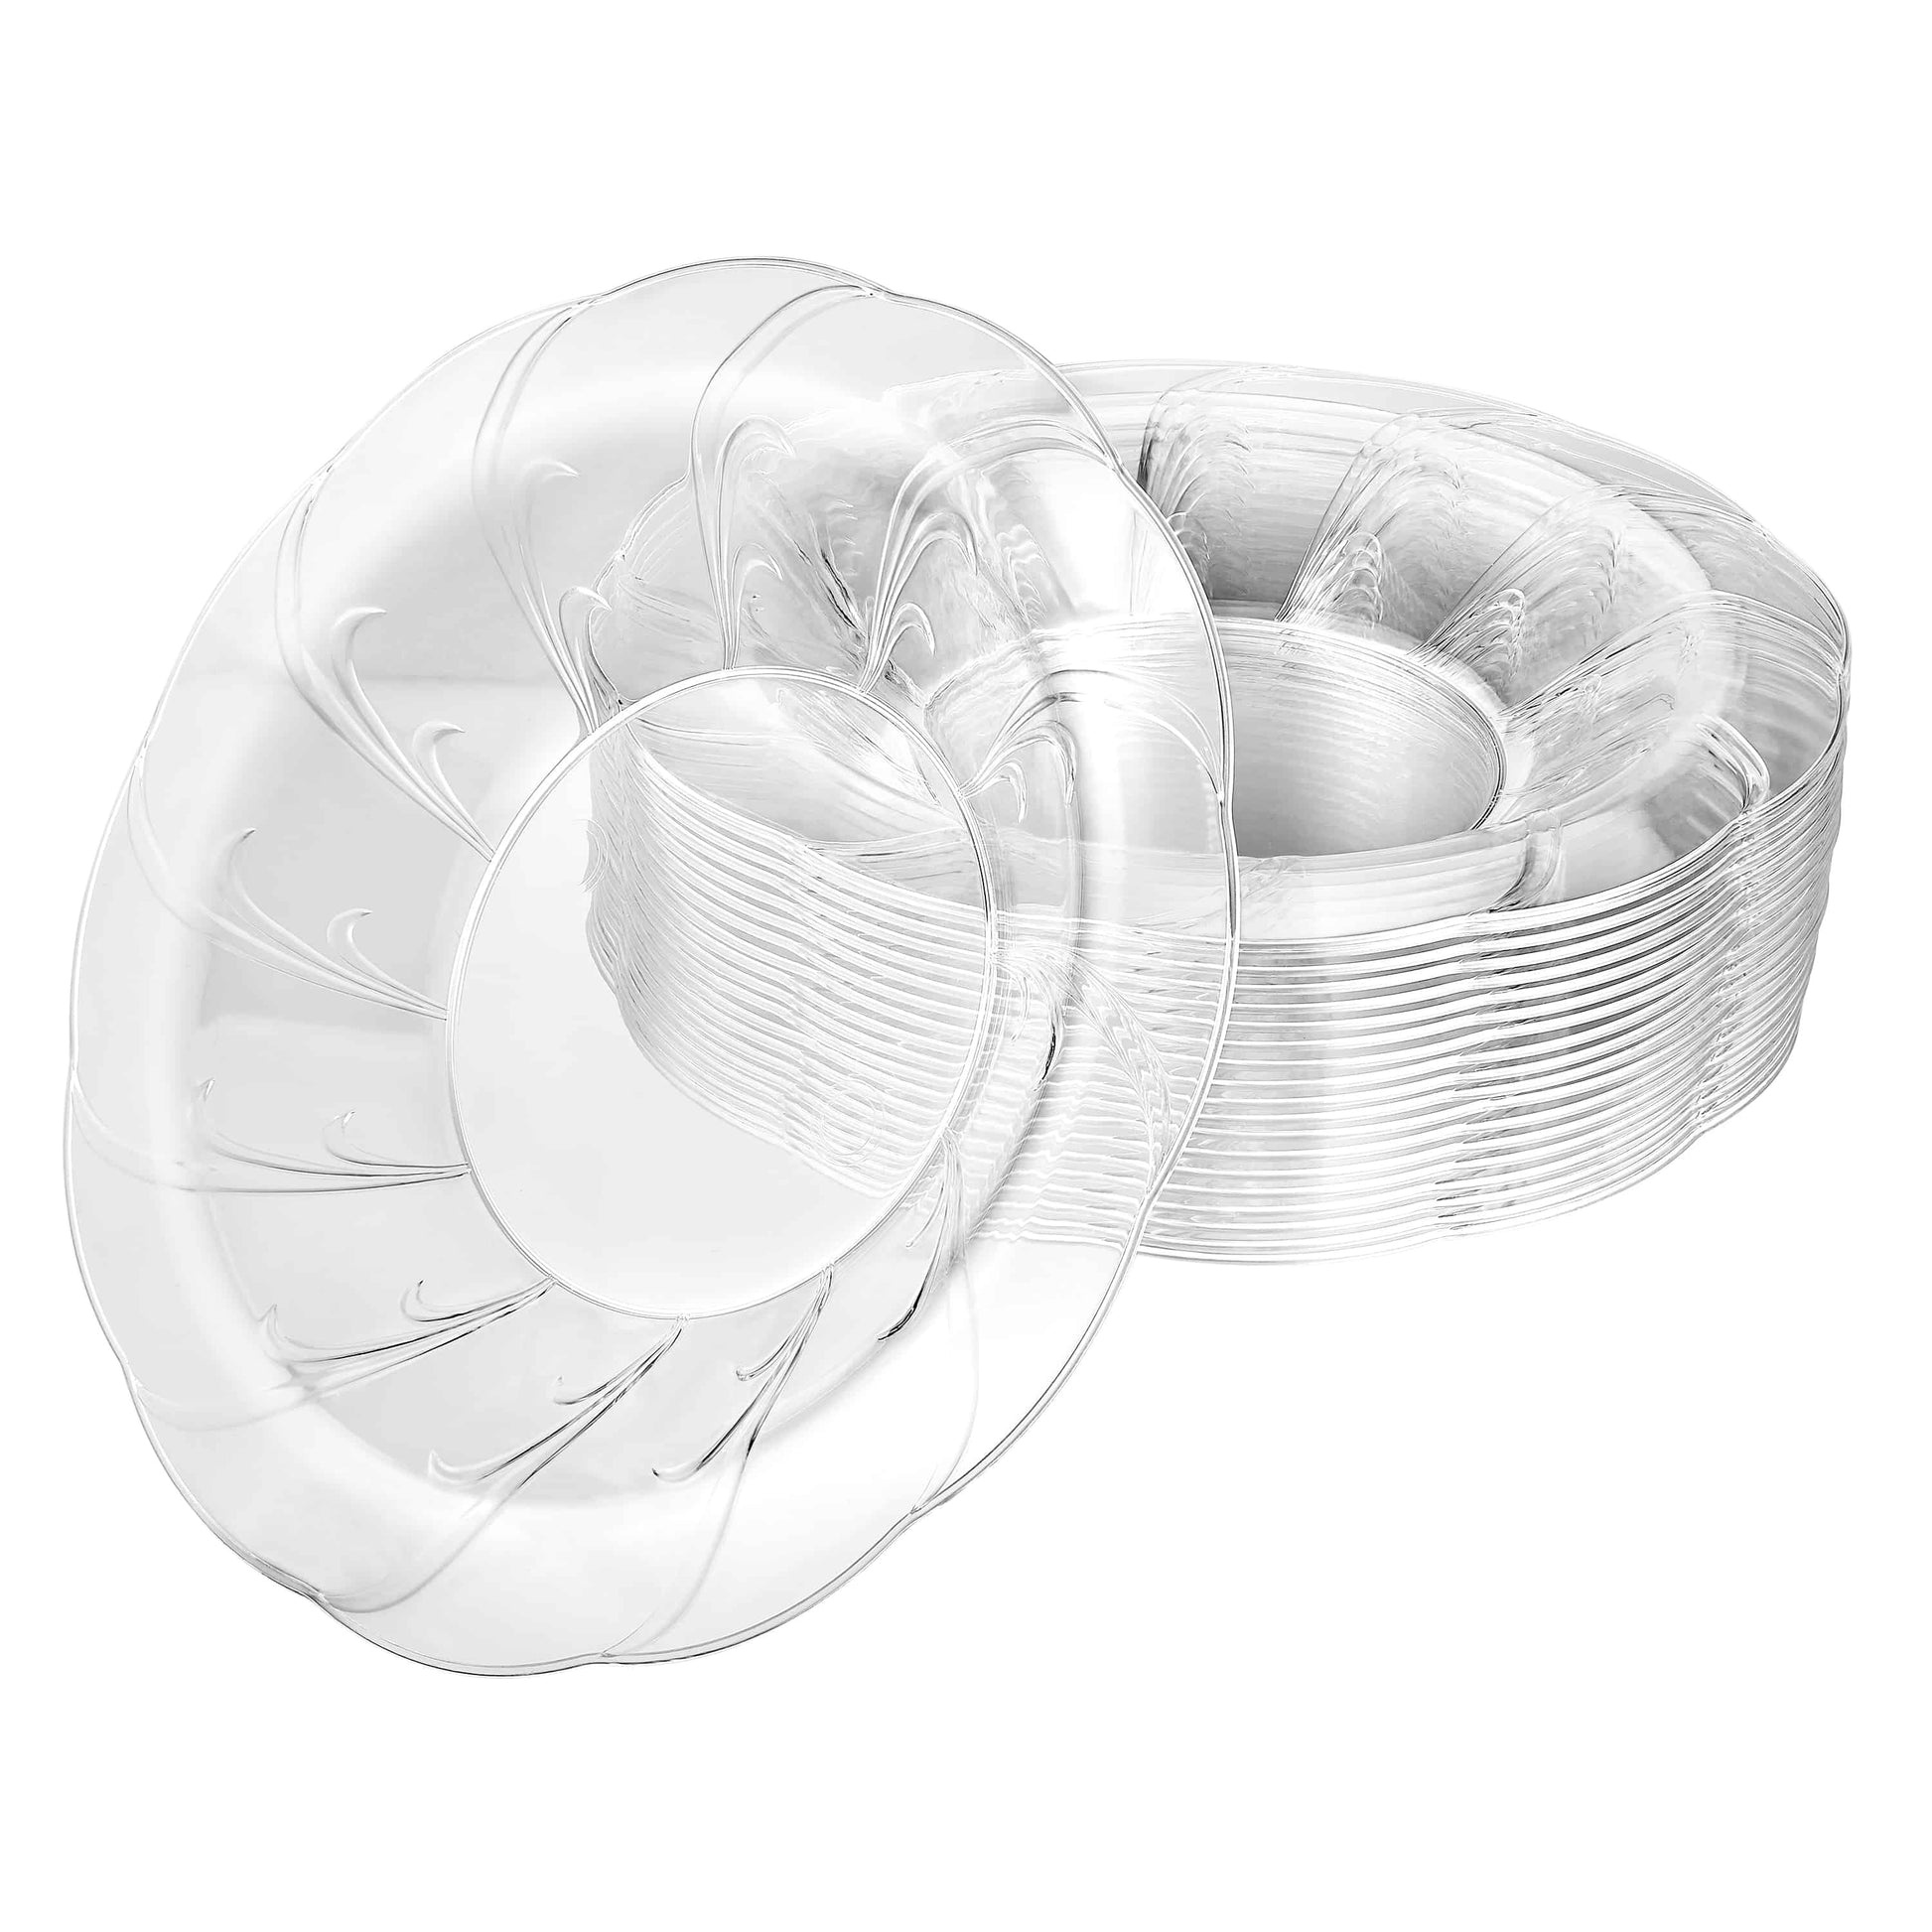 Elegance Premium Clear Plastic Round Dinner Bowls